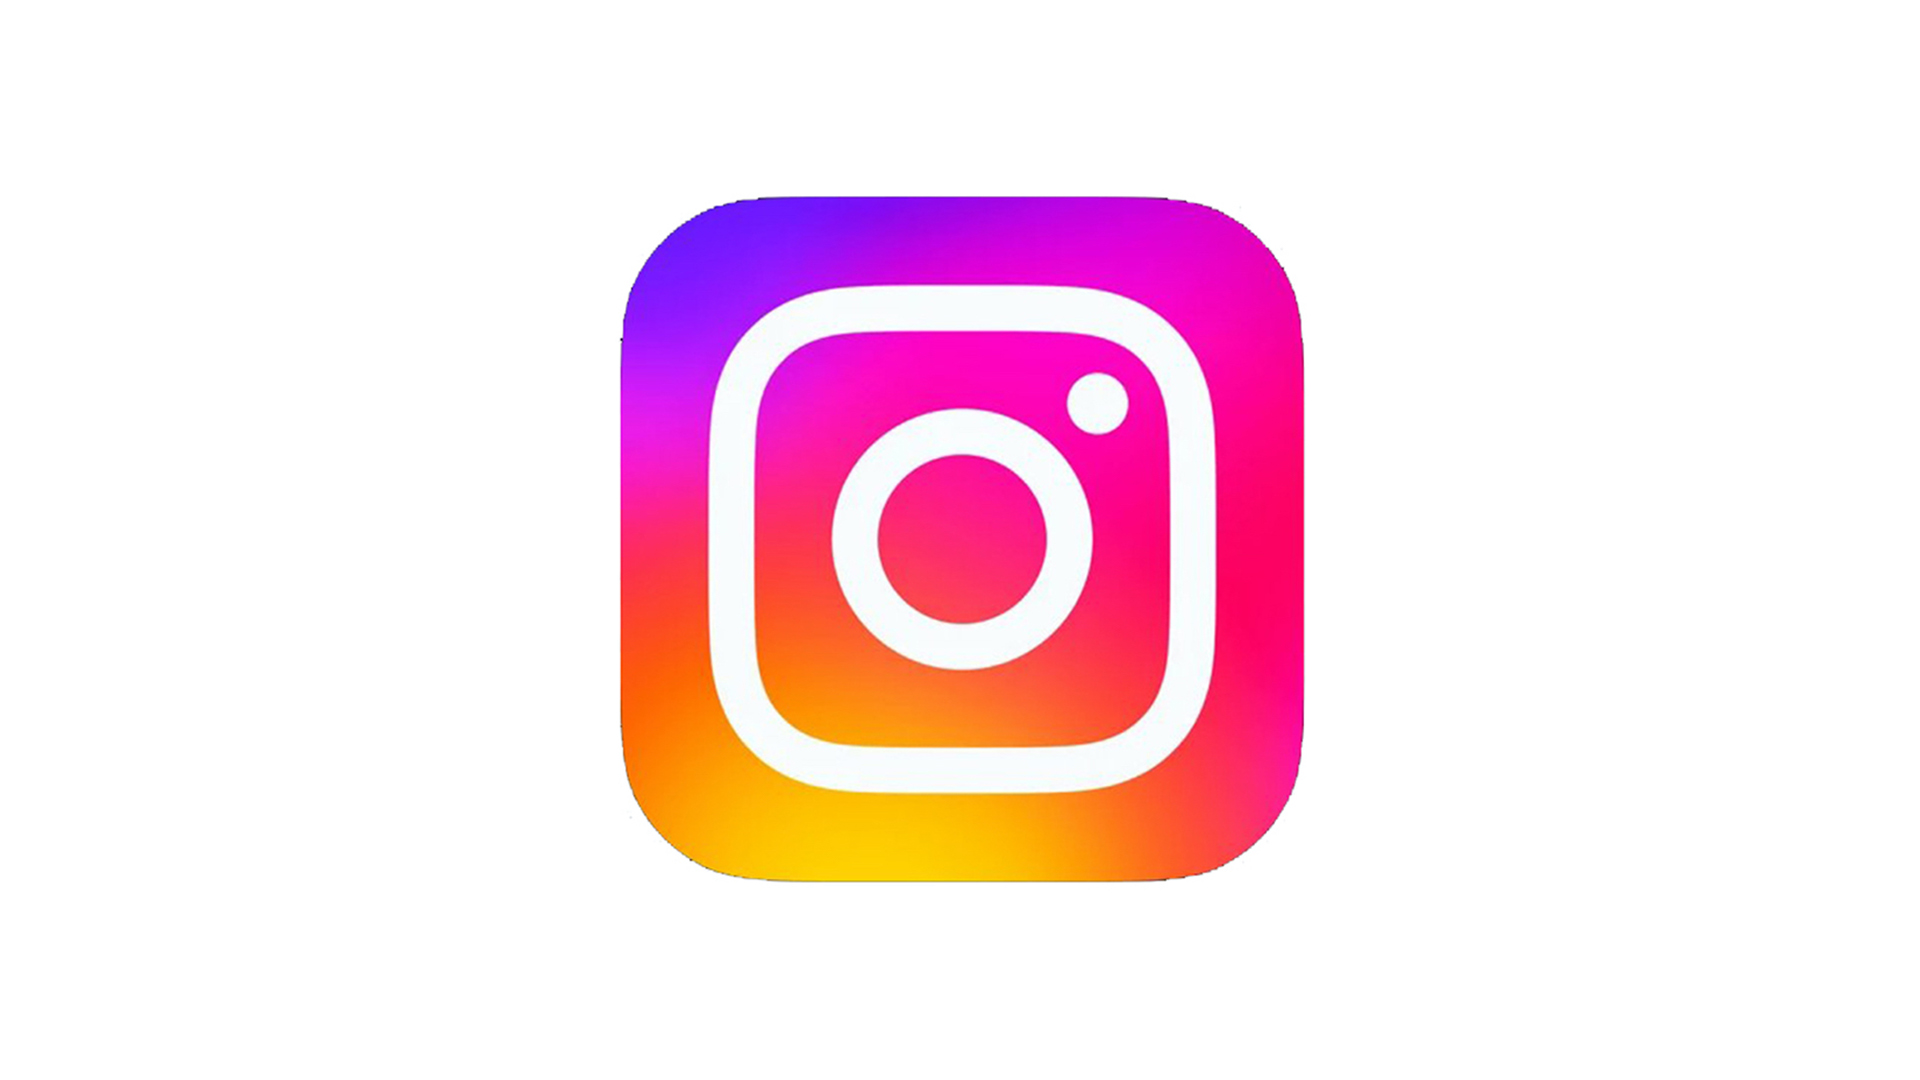 People aren't loving Instagram's bright new app icon